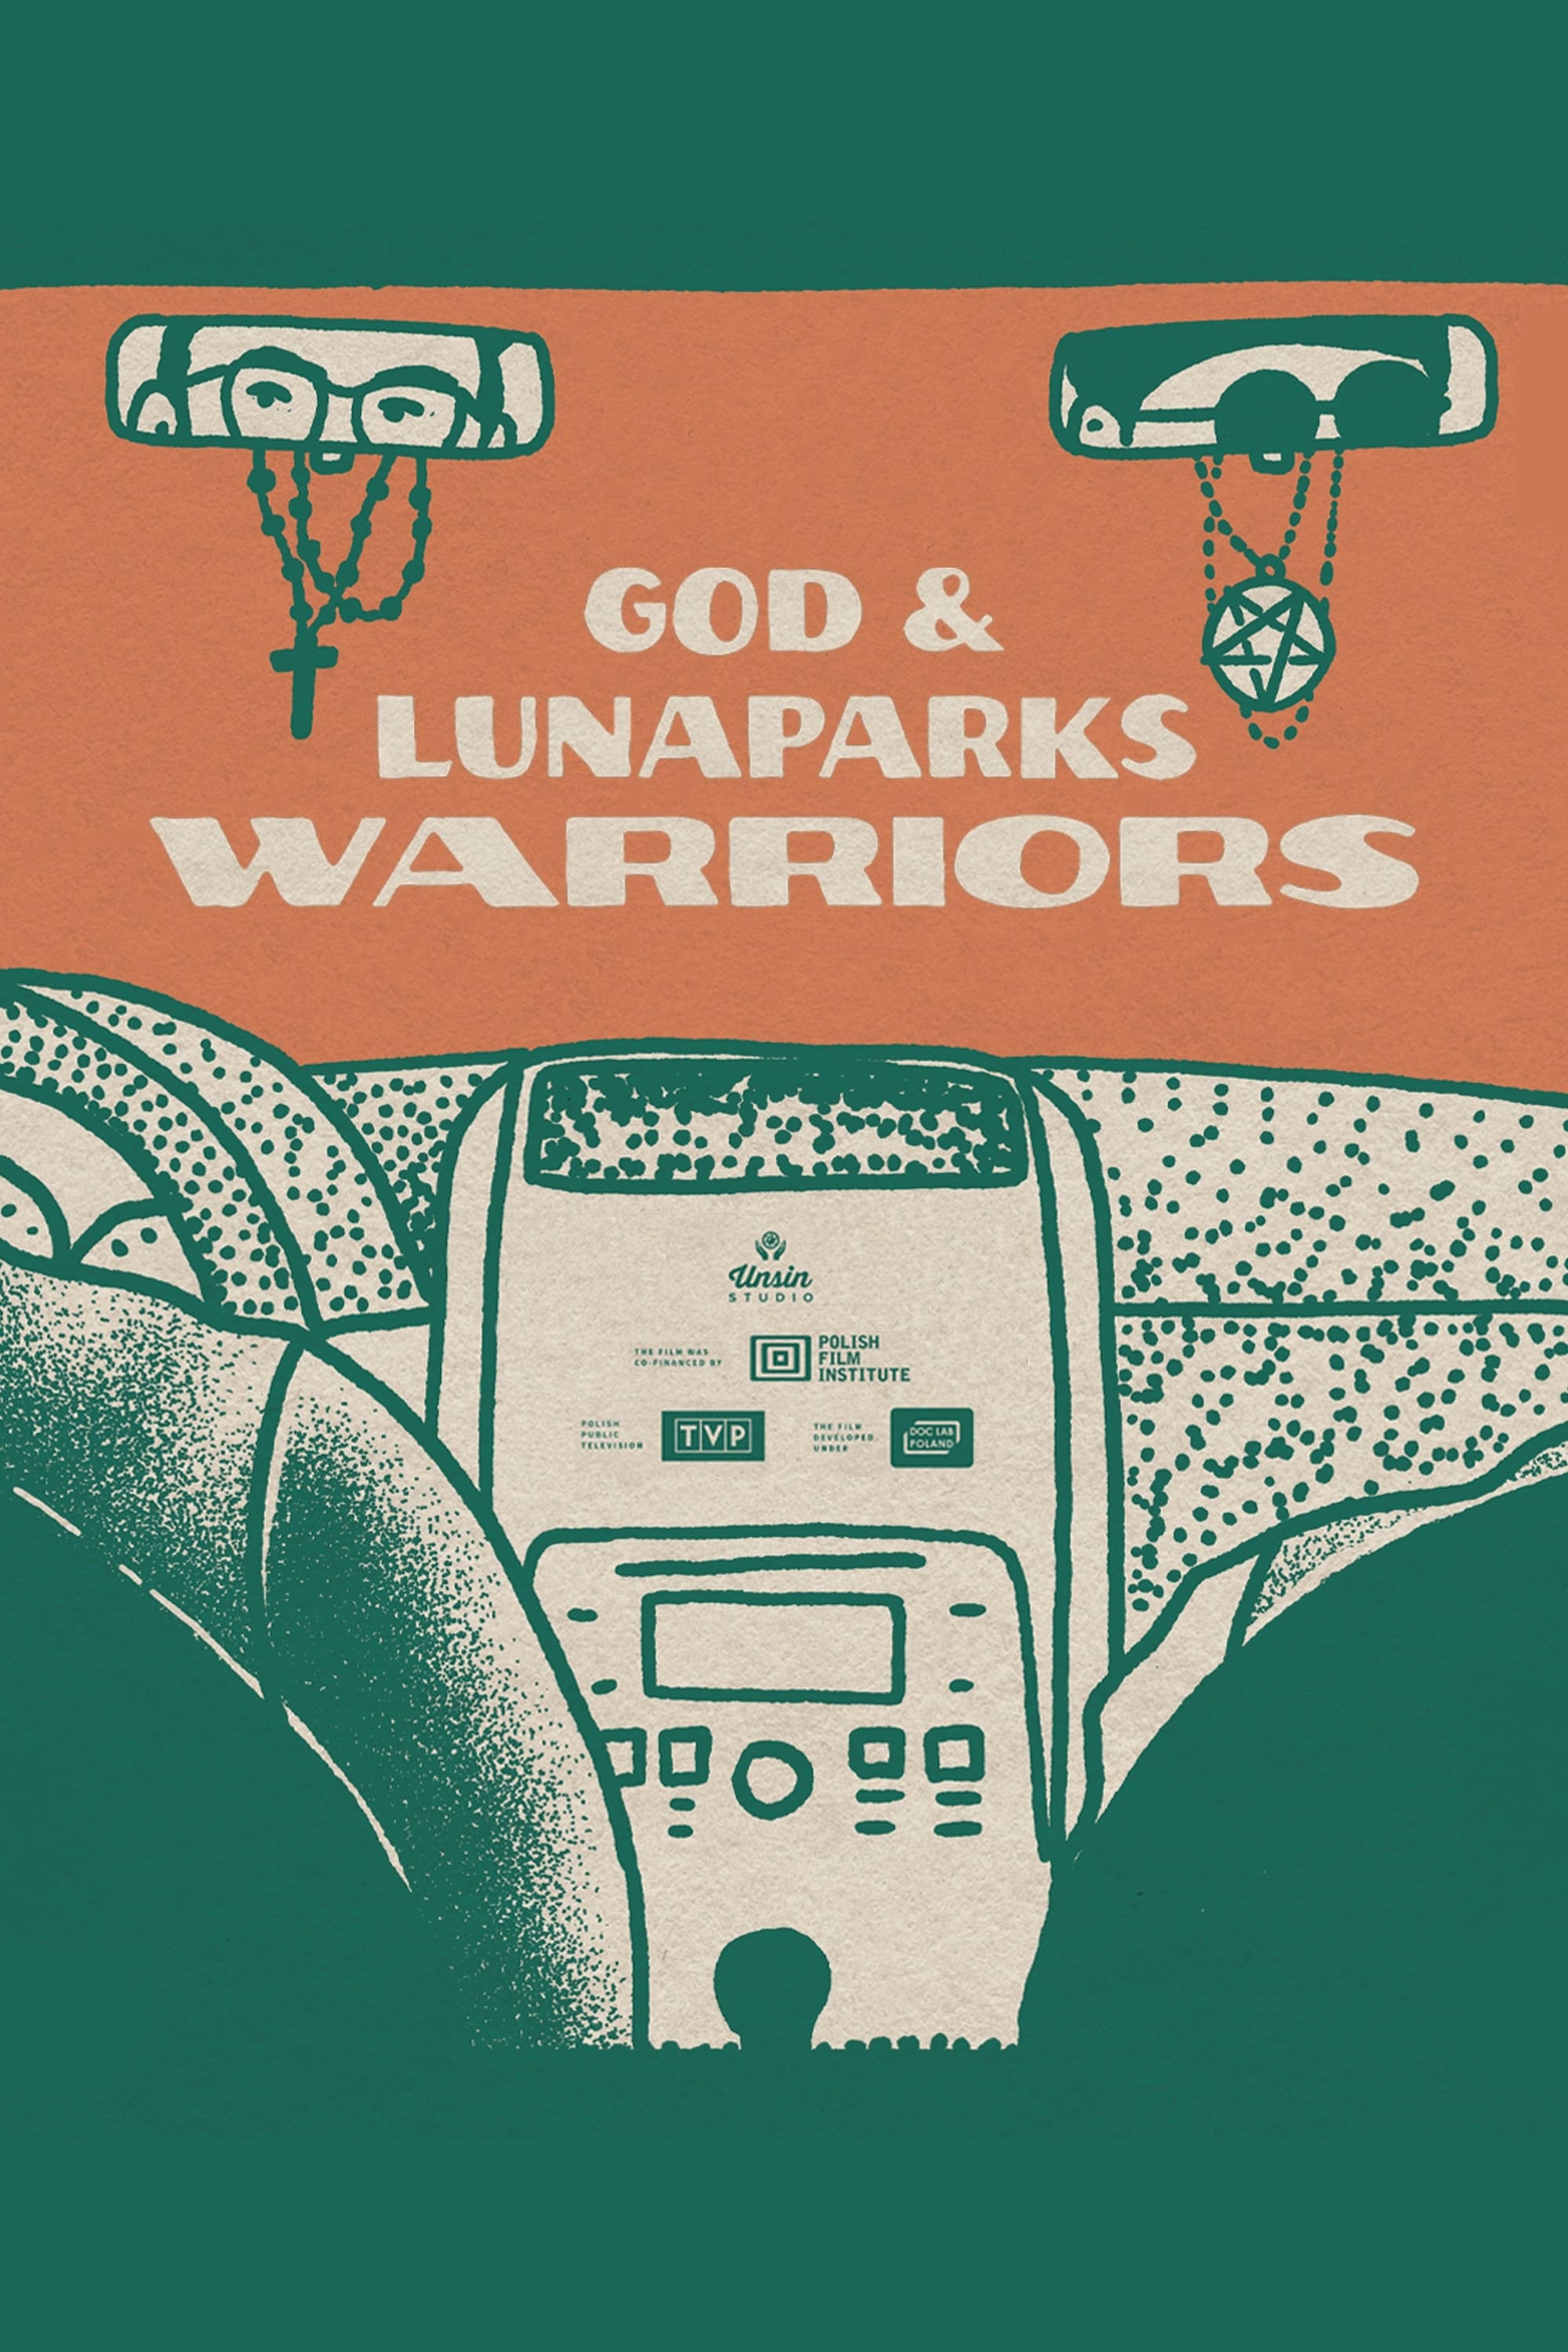 God and Lunaparks' Warriors